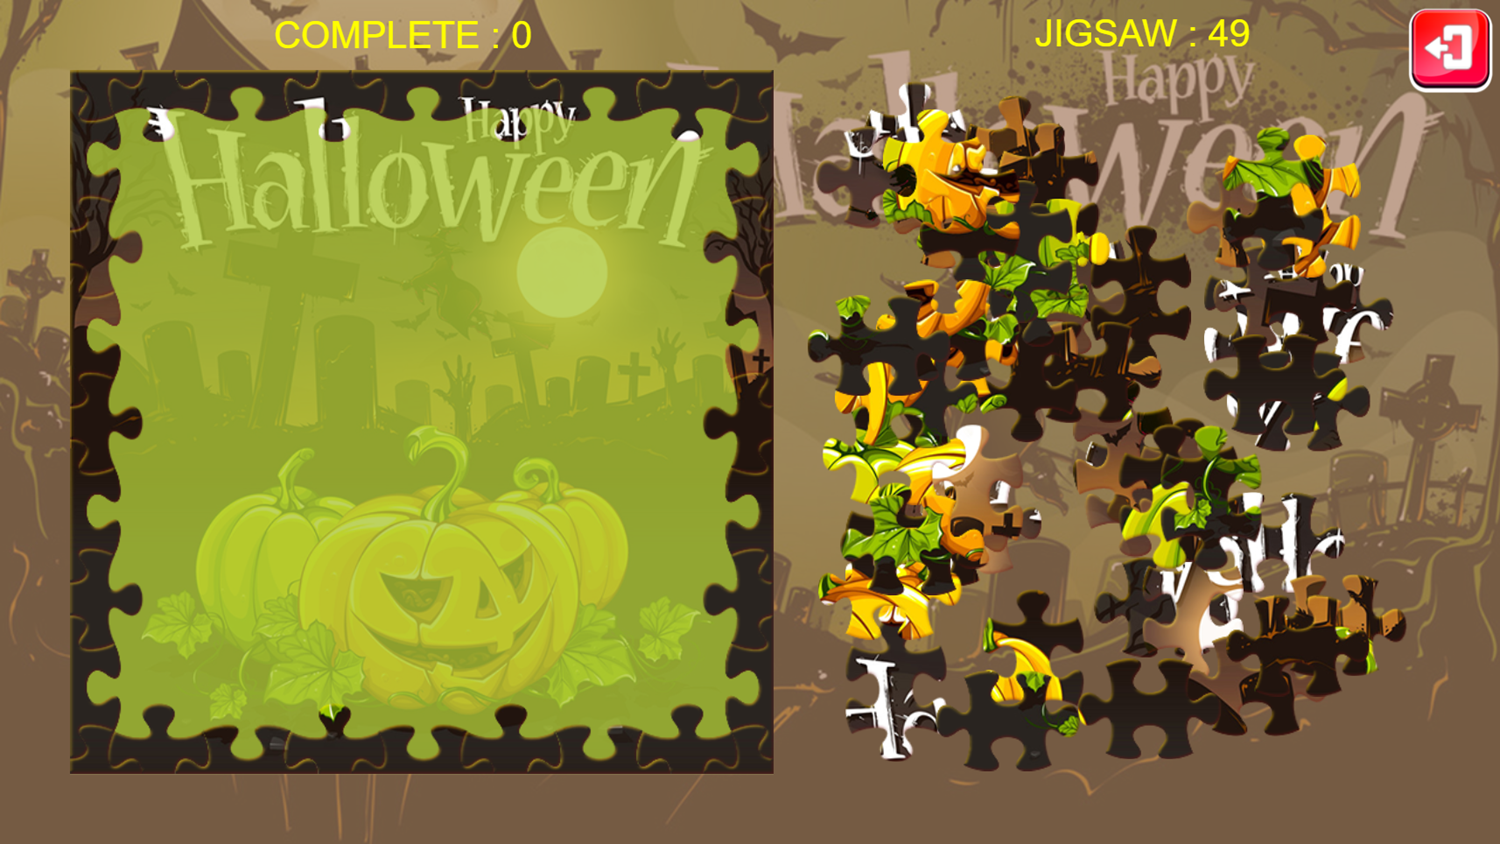 Happy Halloween Jigsaw Puzzle Game Start Screenshot.